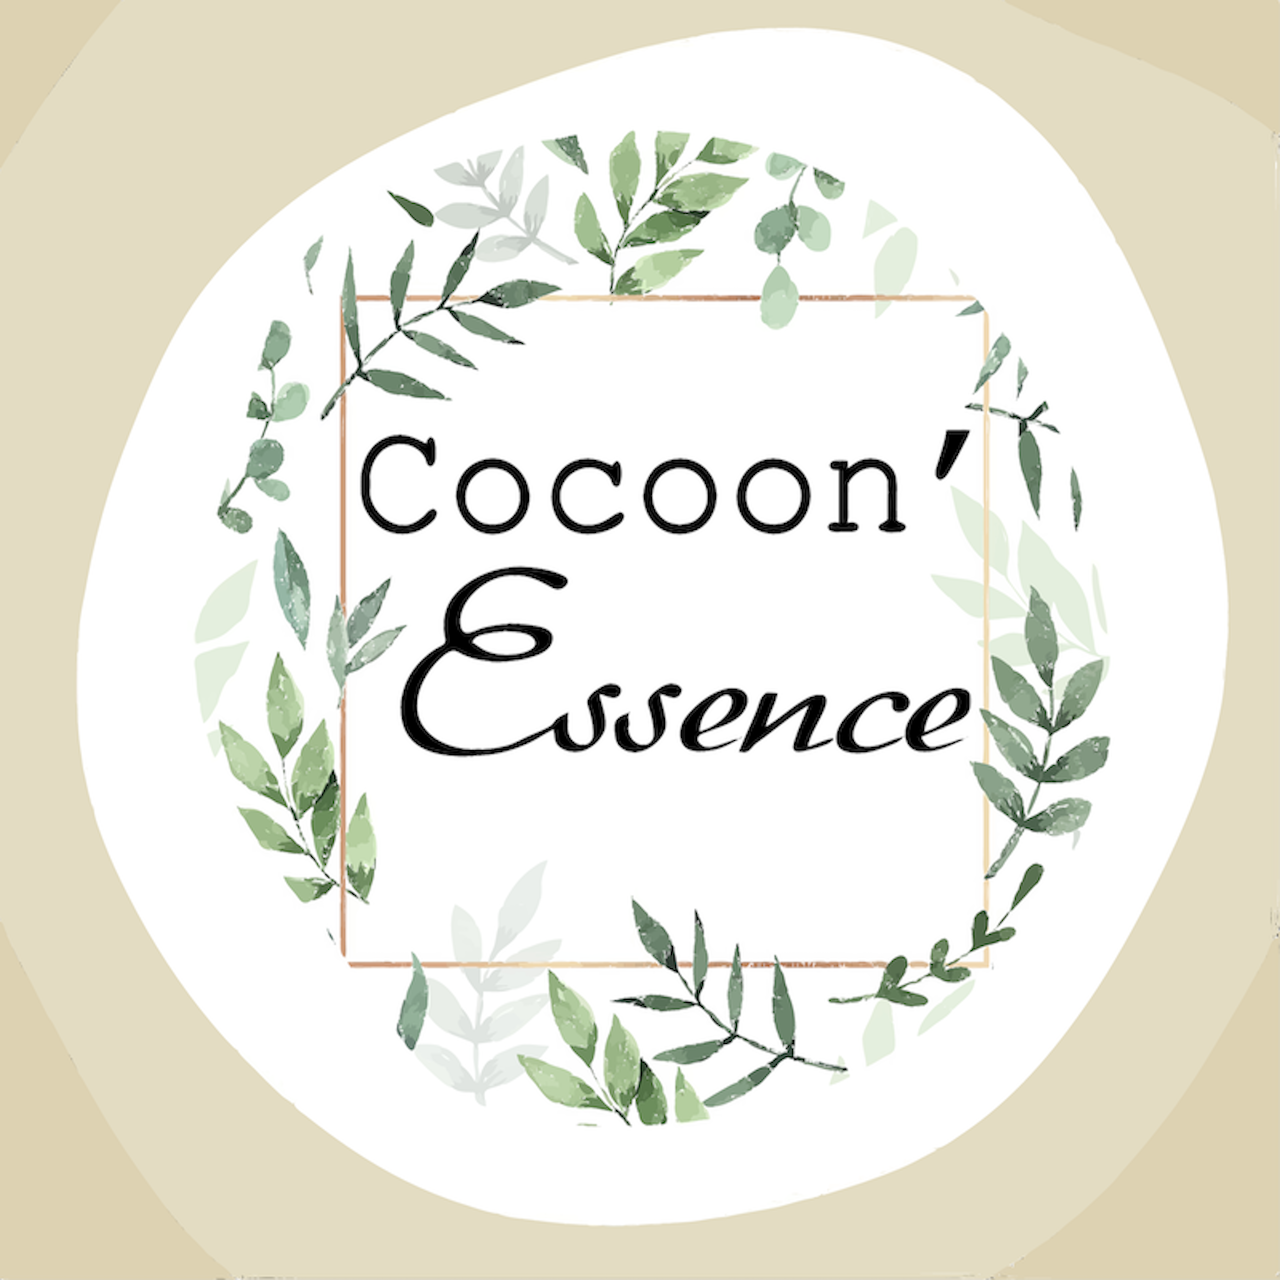 Cocoon’Essence